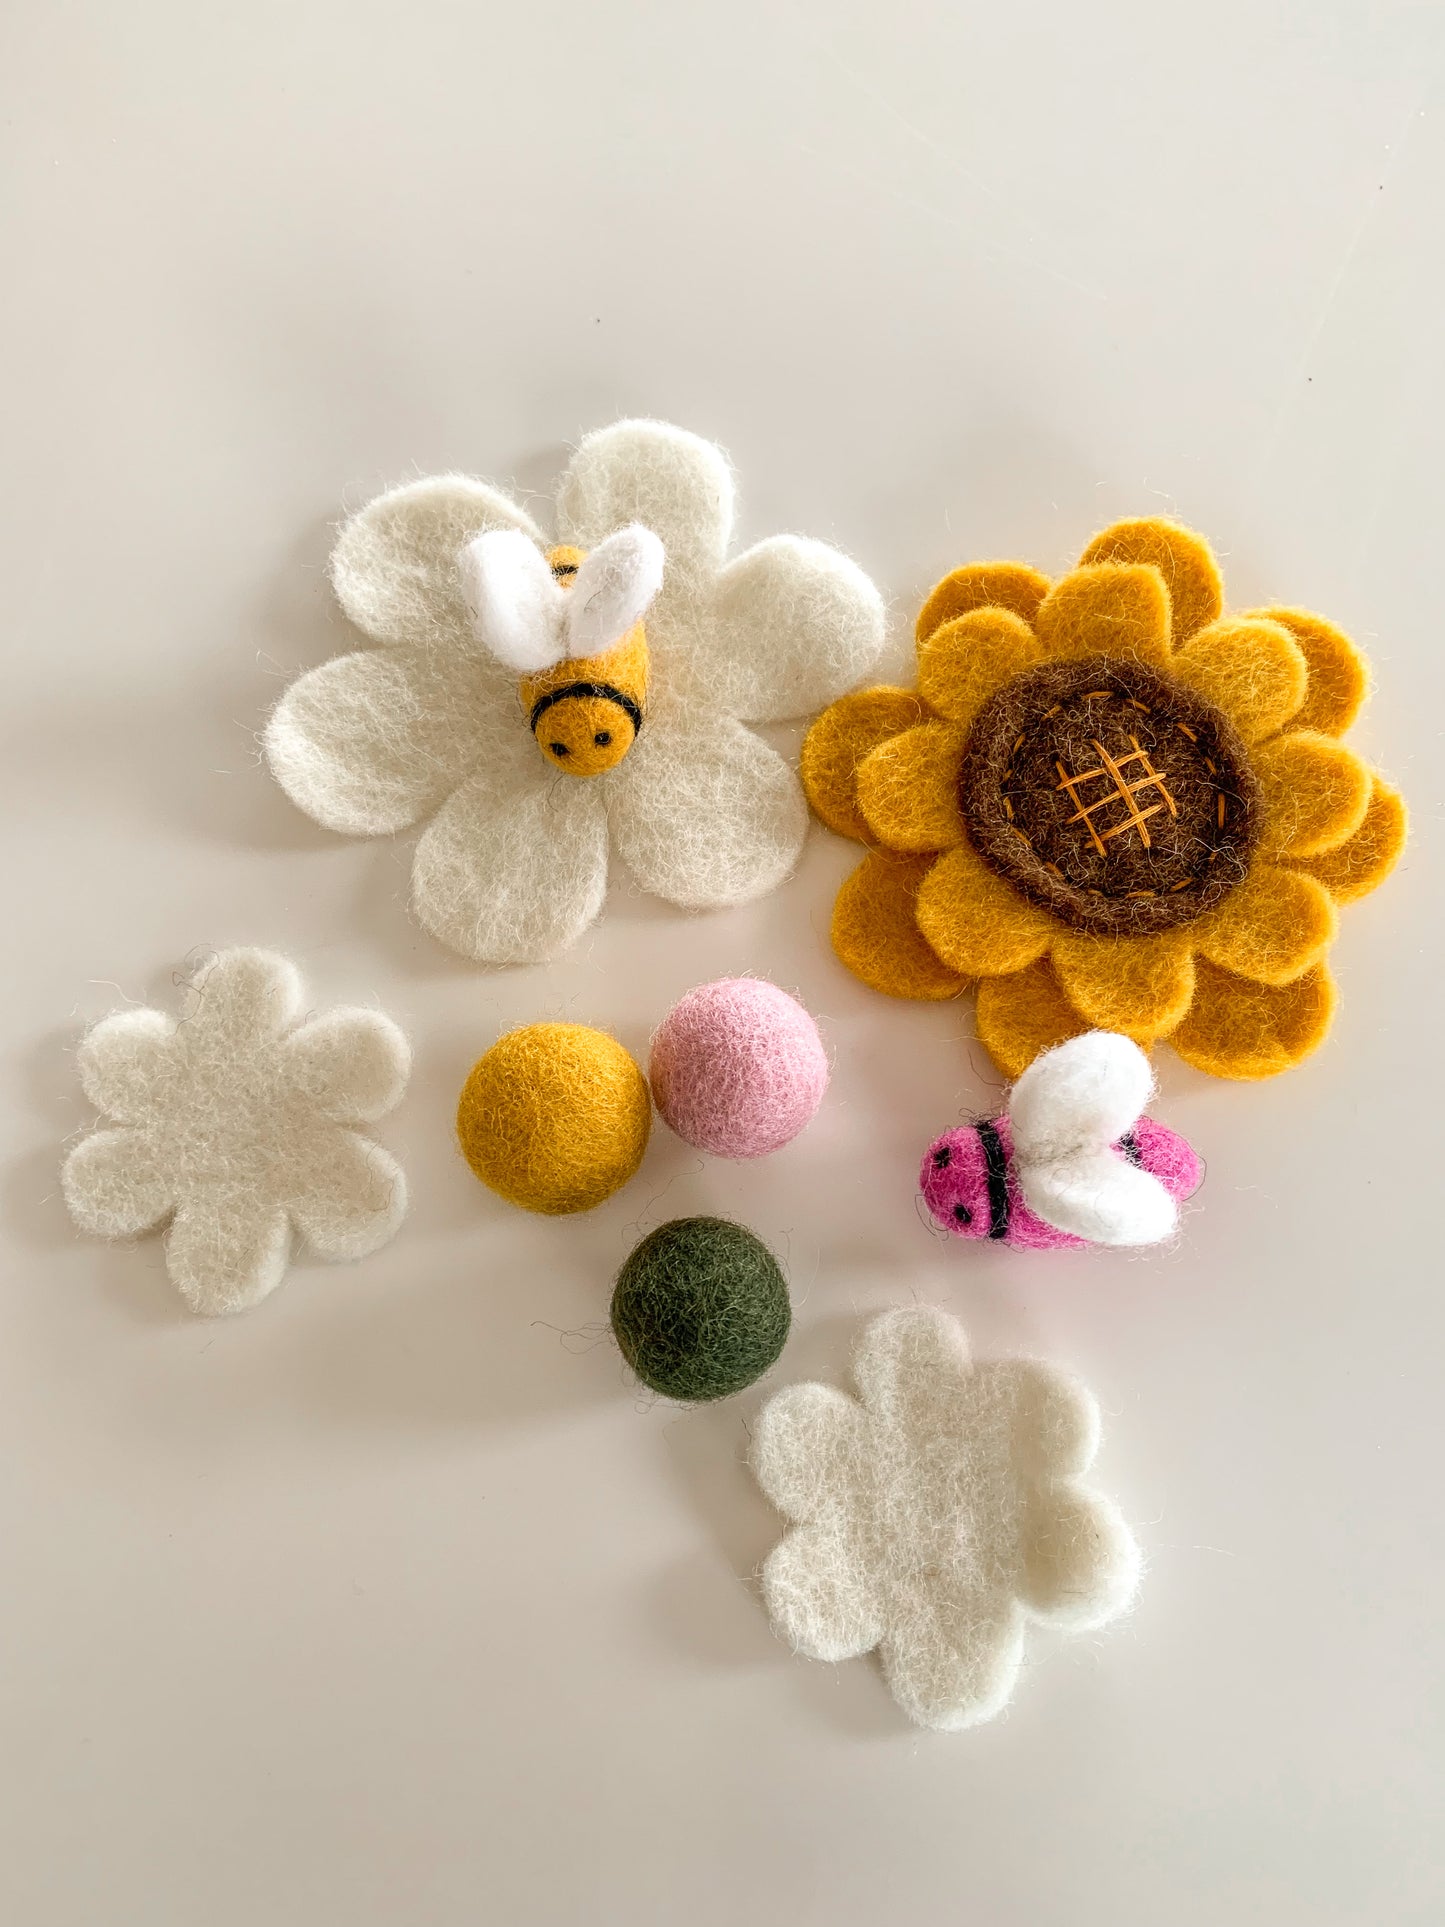 Bee + Flower play set